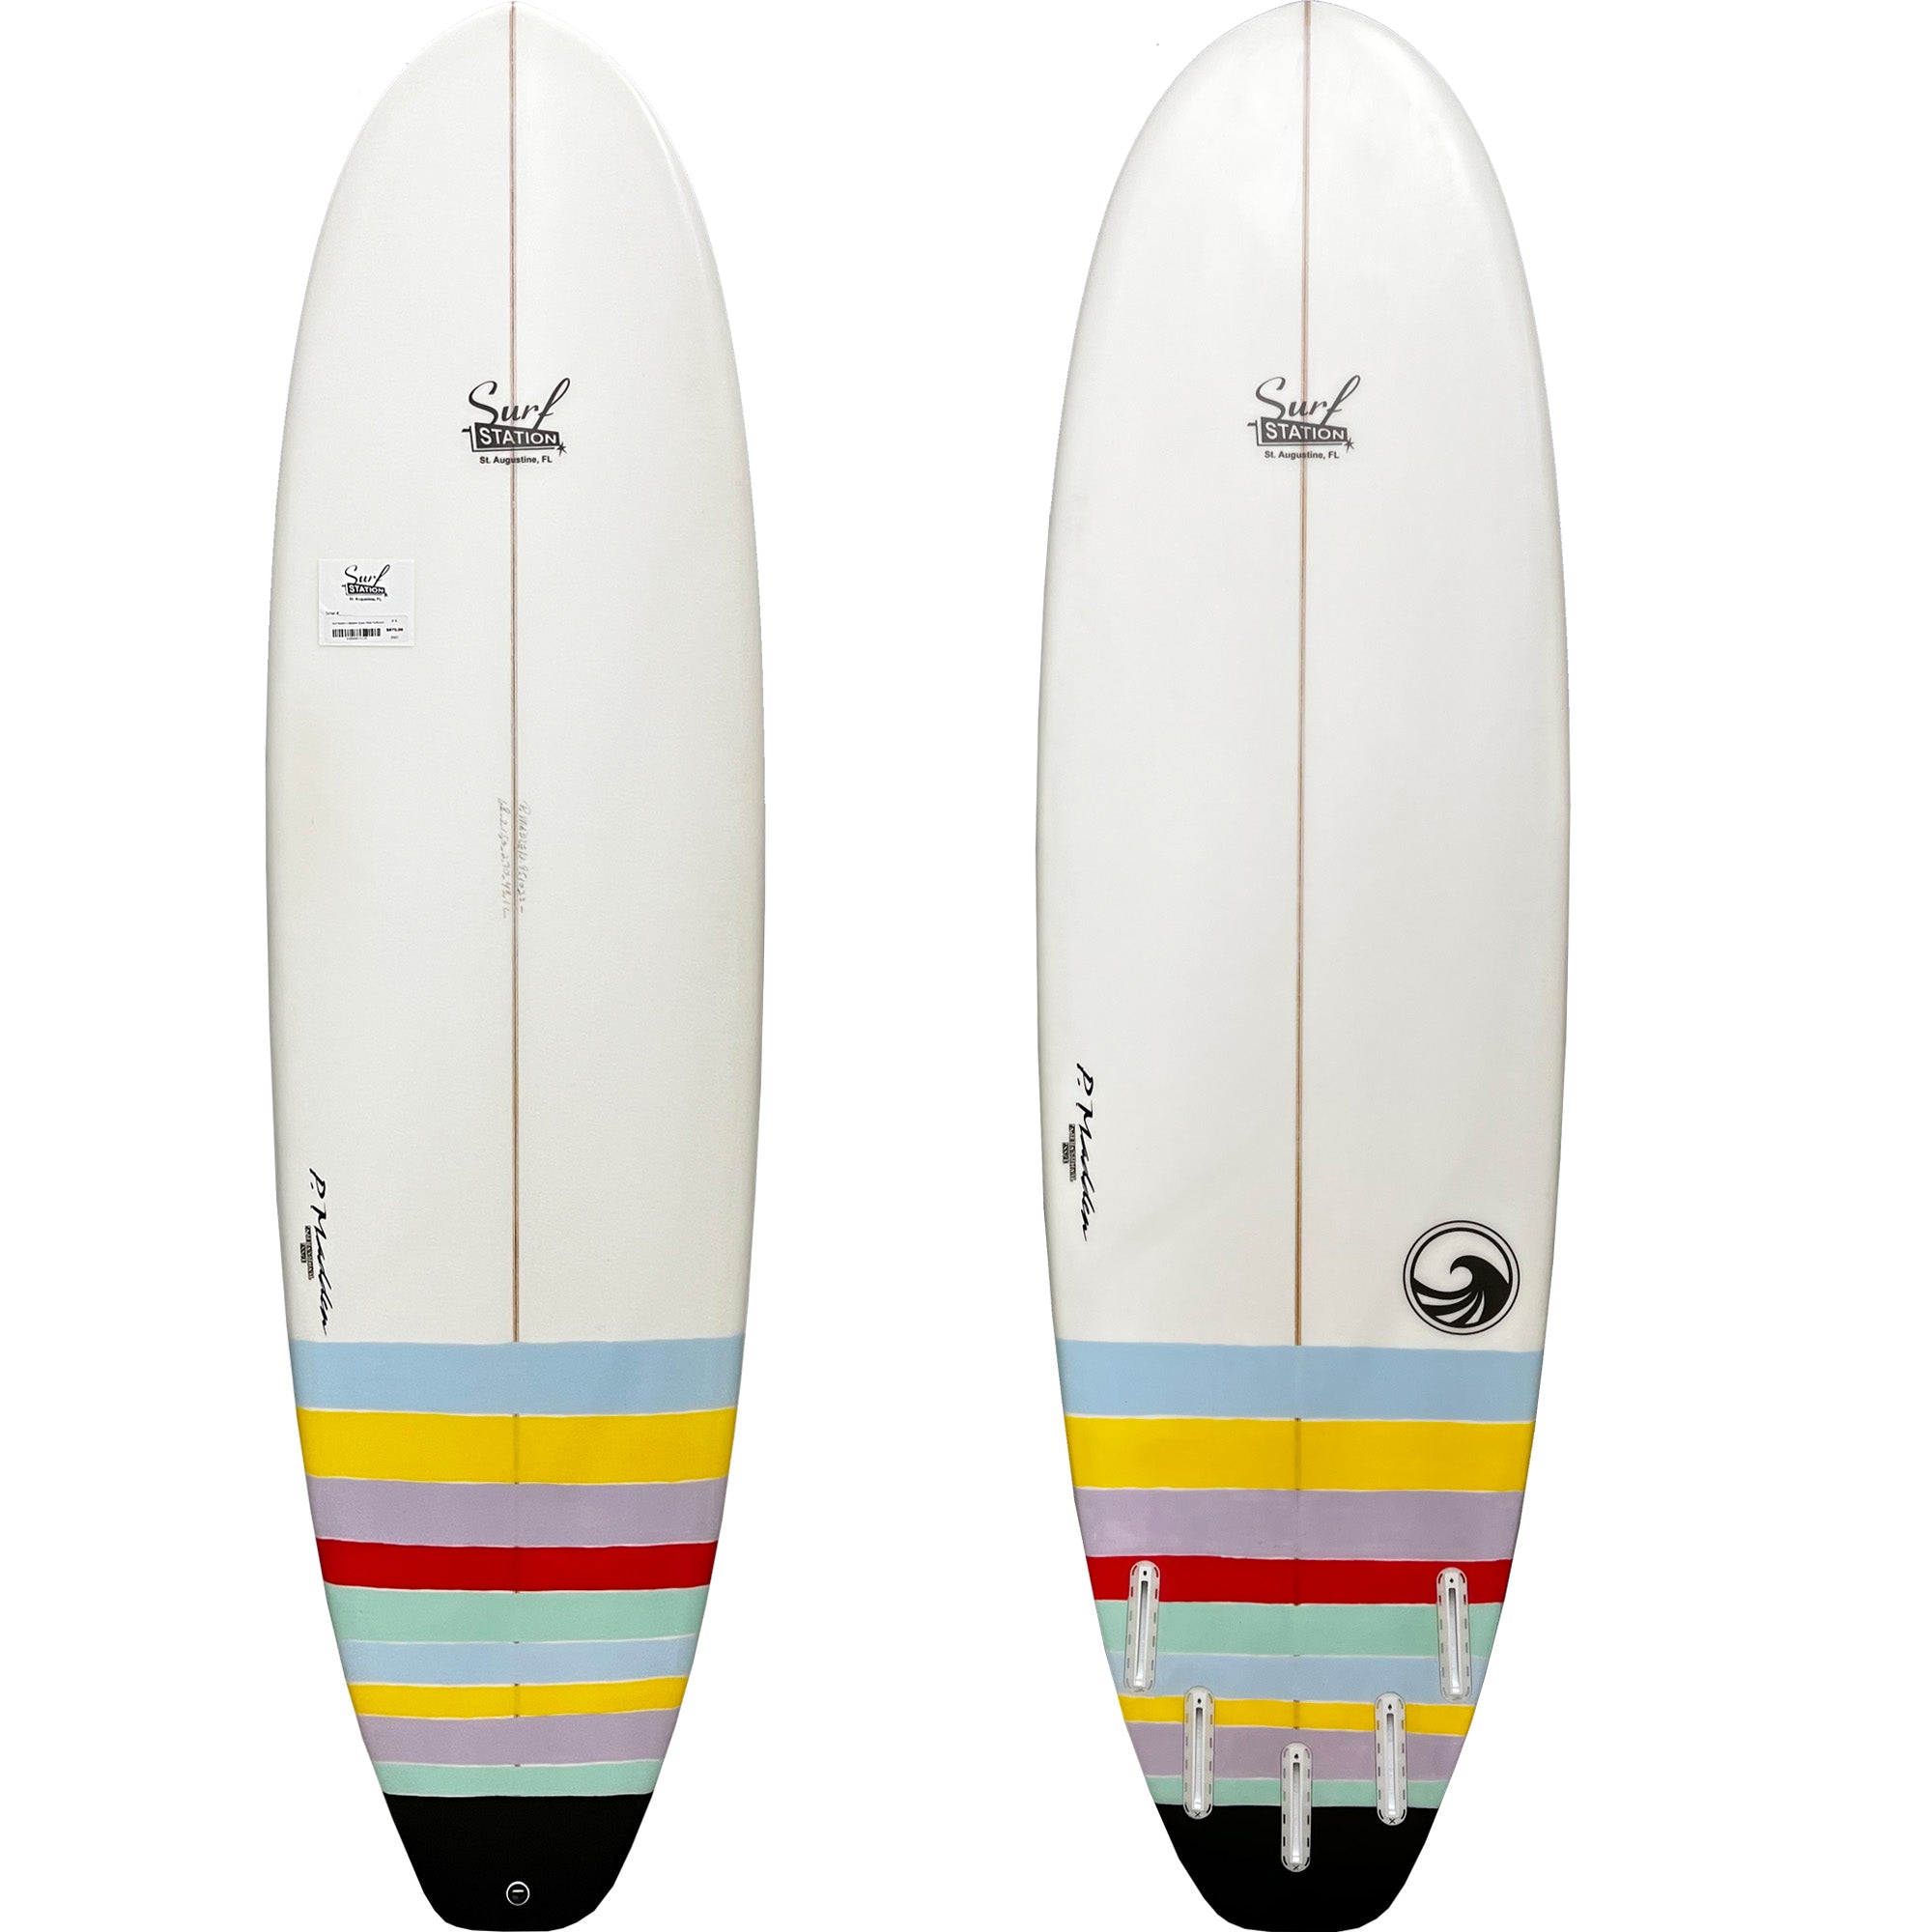 Surf Station x Madden Super Wide 6'8 Surfboard